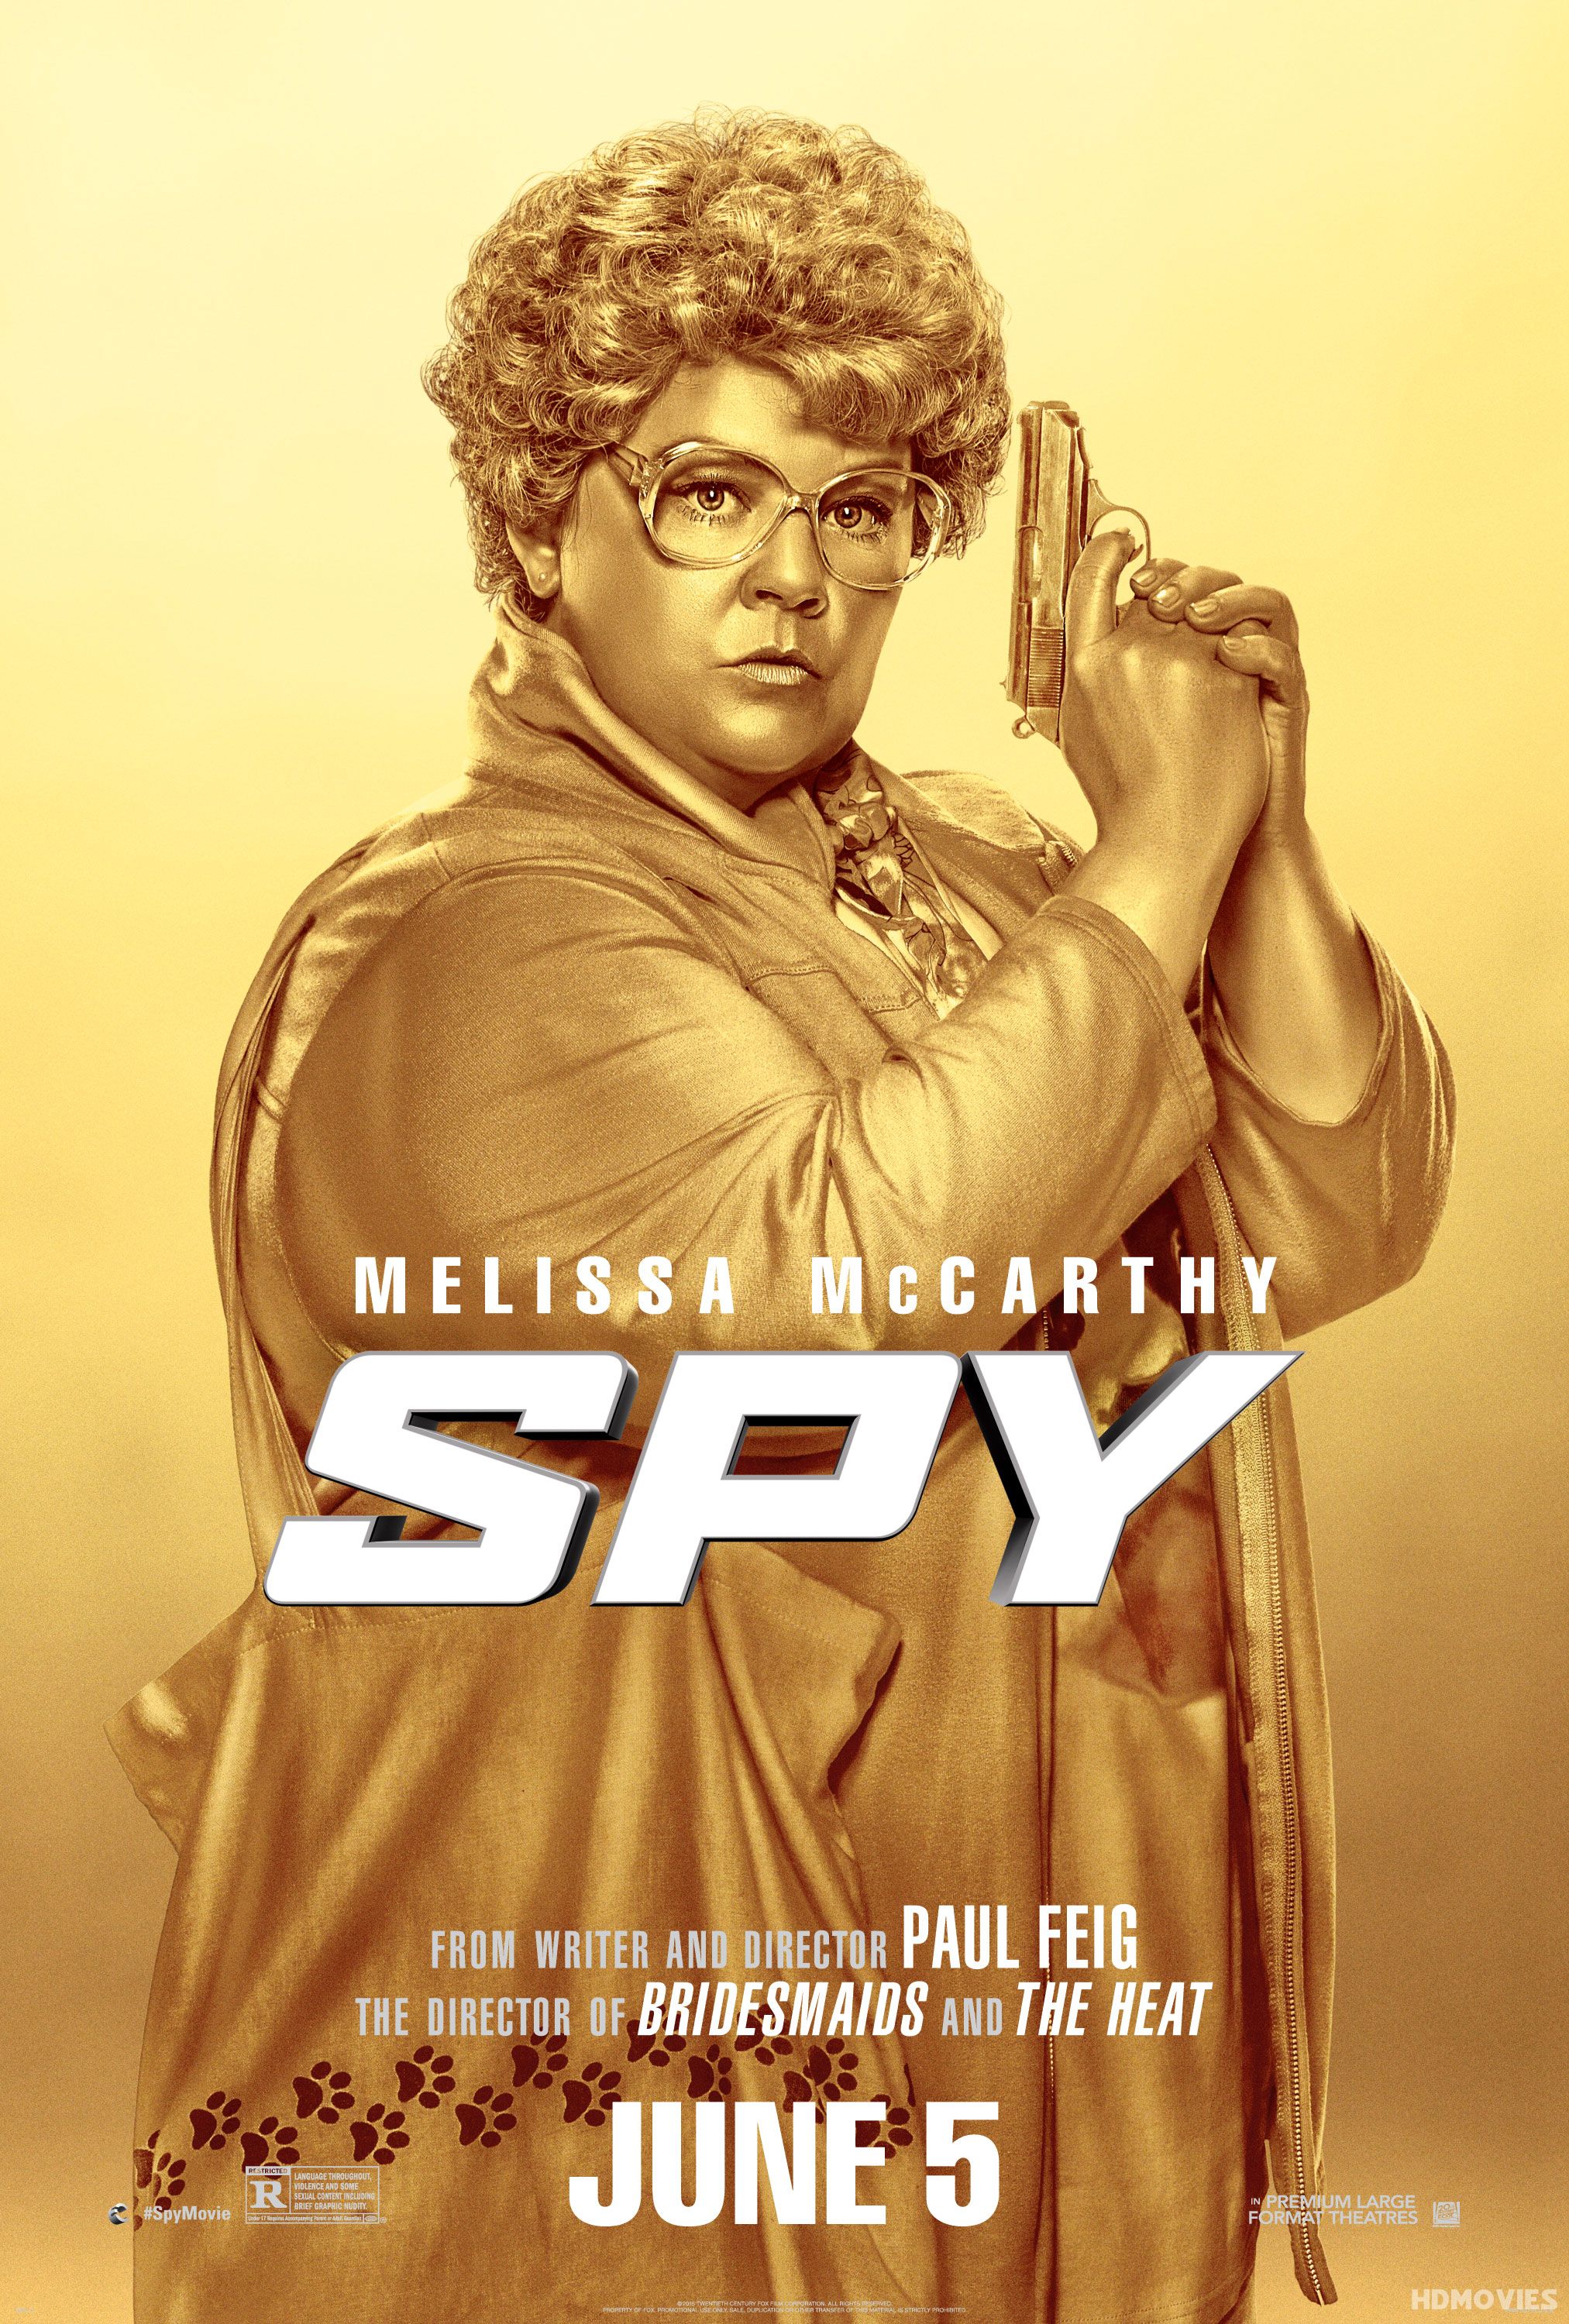 Spy (2015) Hindi Dubbed